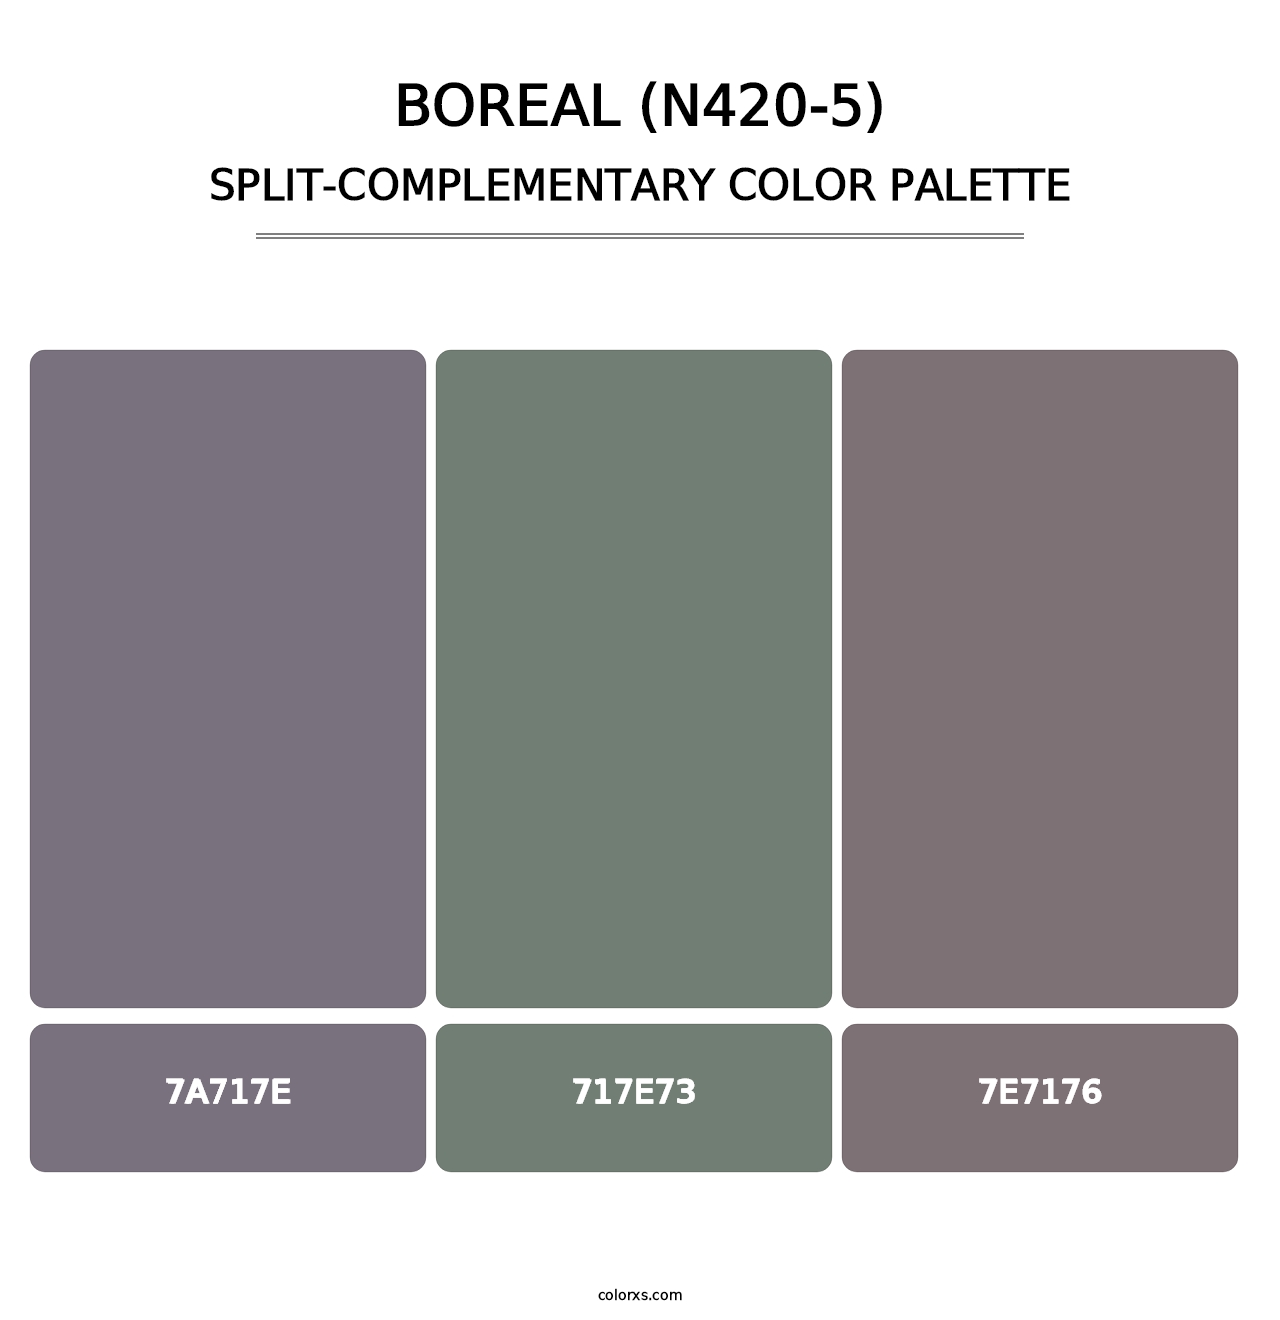 Boreal (N420-5) - Split-Complementary Color Palette